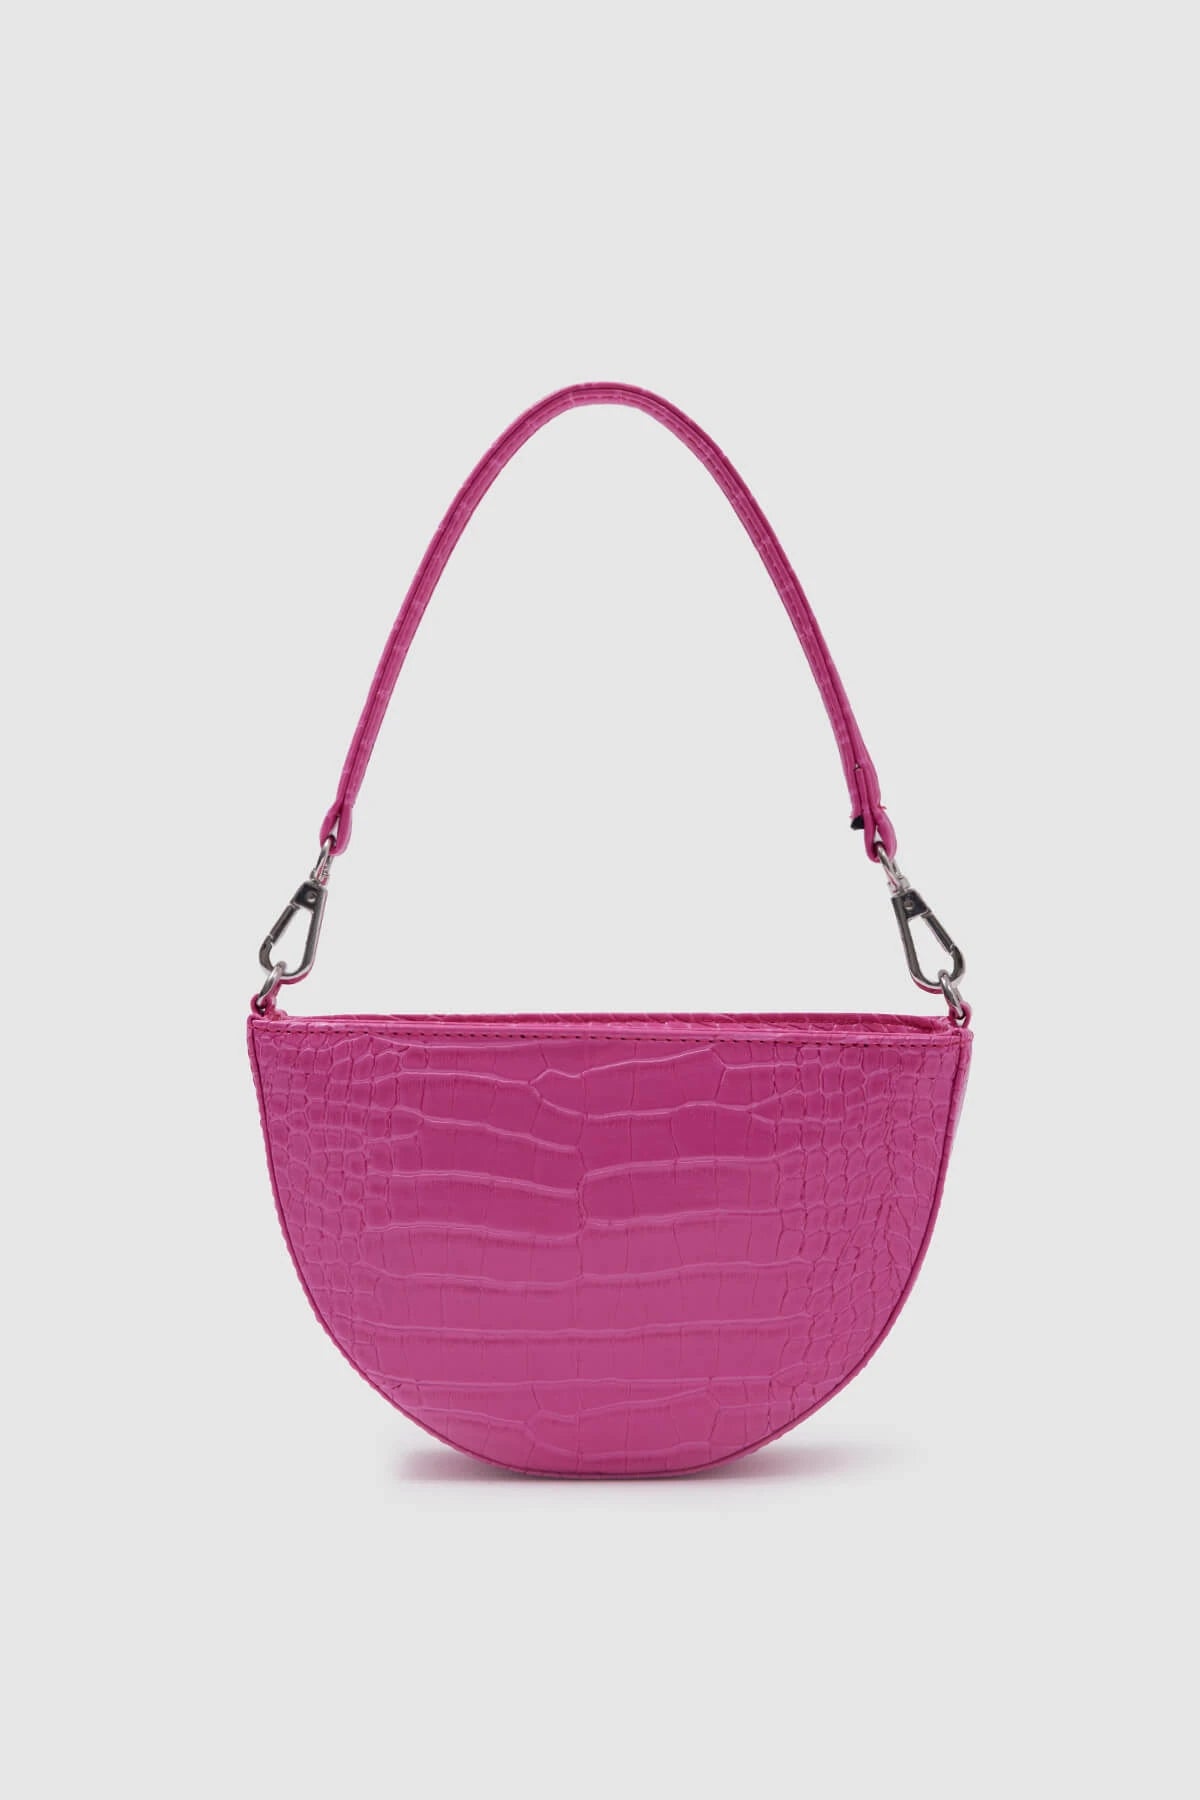 Vicky Patent Leather Crocodile Pattern Baguette Bag baguette bags LUNARITY GARAGE Pink  